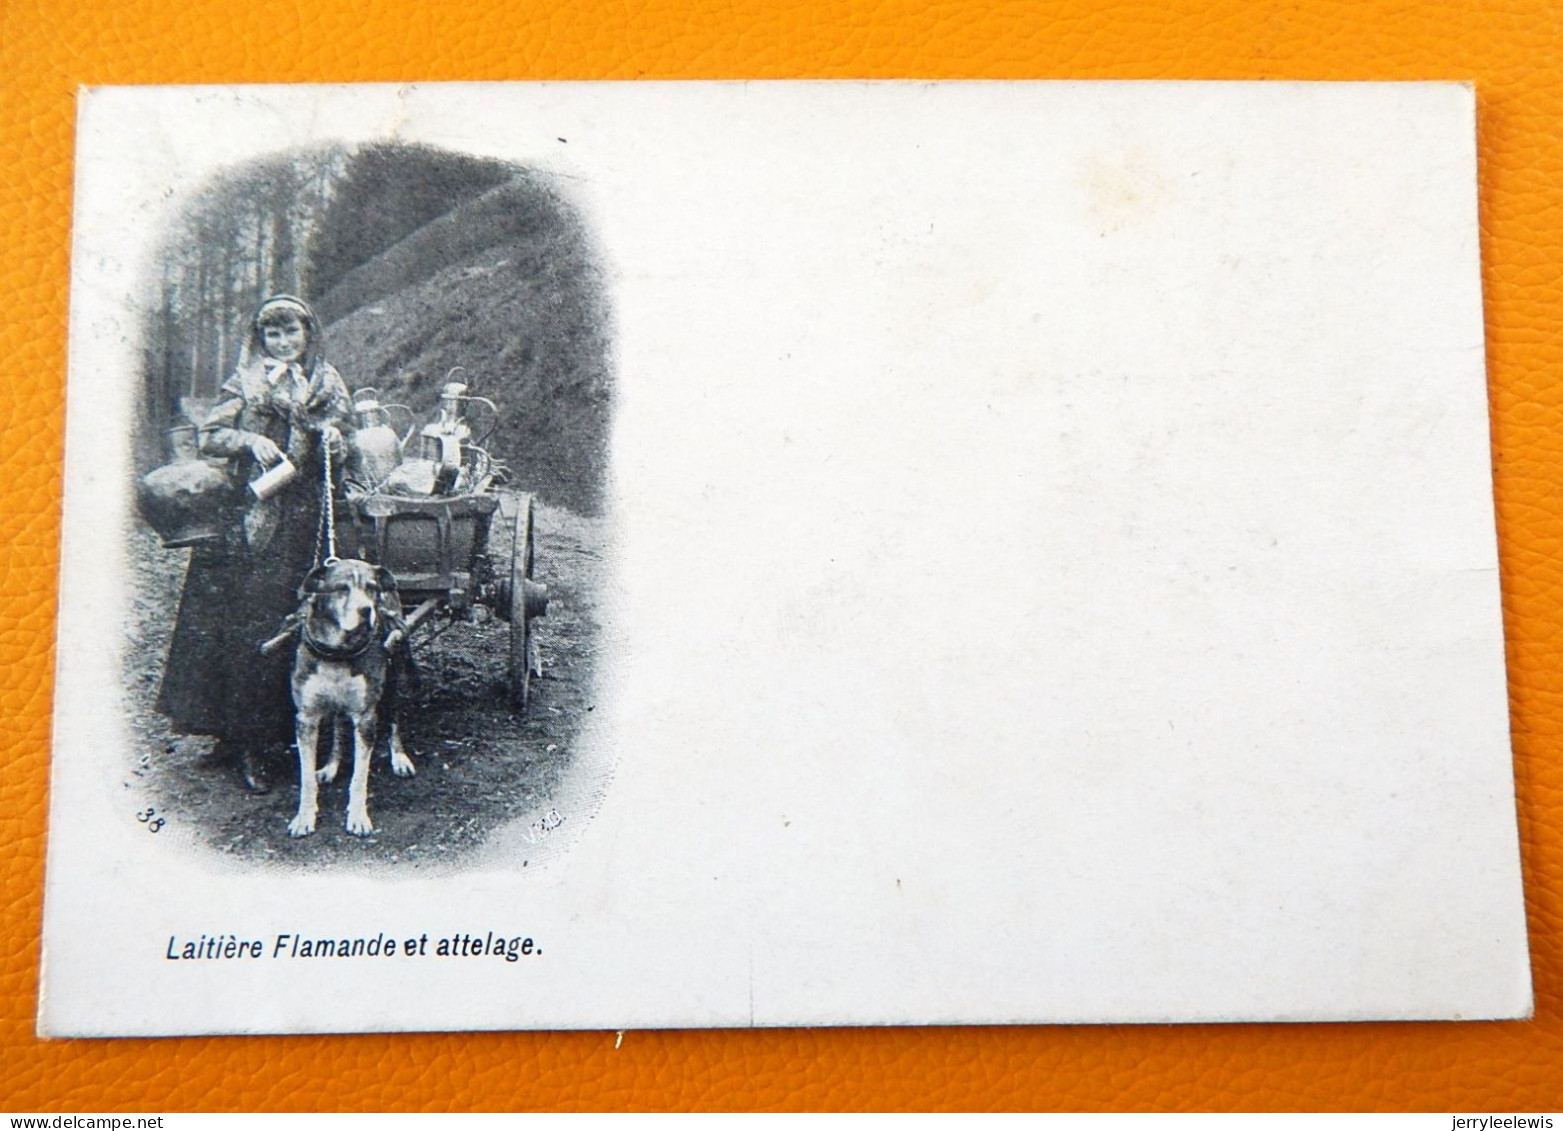 VLAANDEREN  - Vlaamse Melkvrouw  En Koets  - Laitière Flamande Et  Attelage  -  1908 - Street Merchants